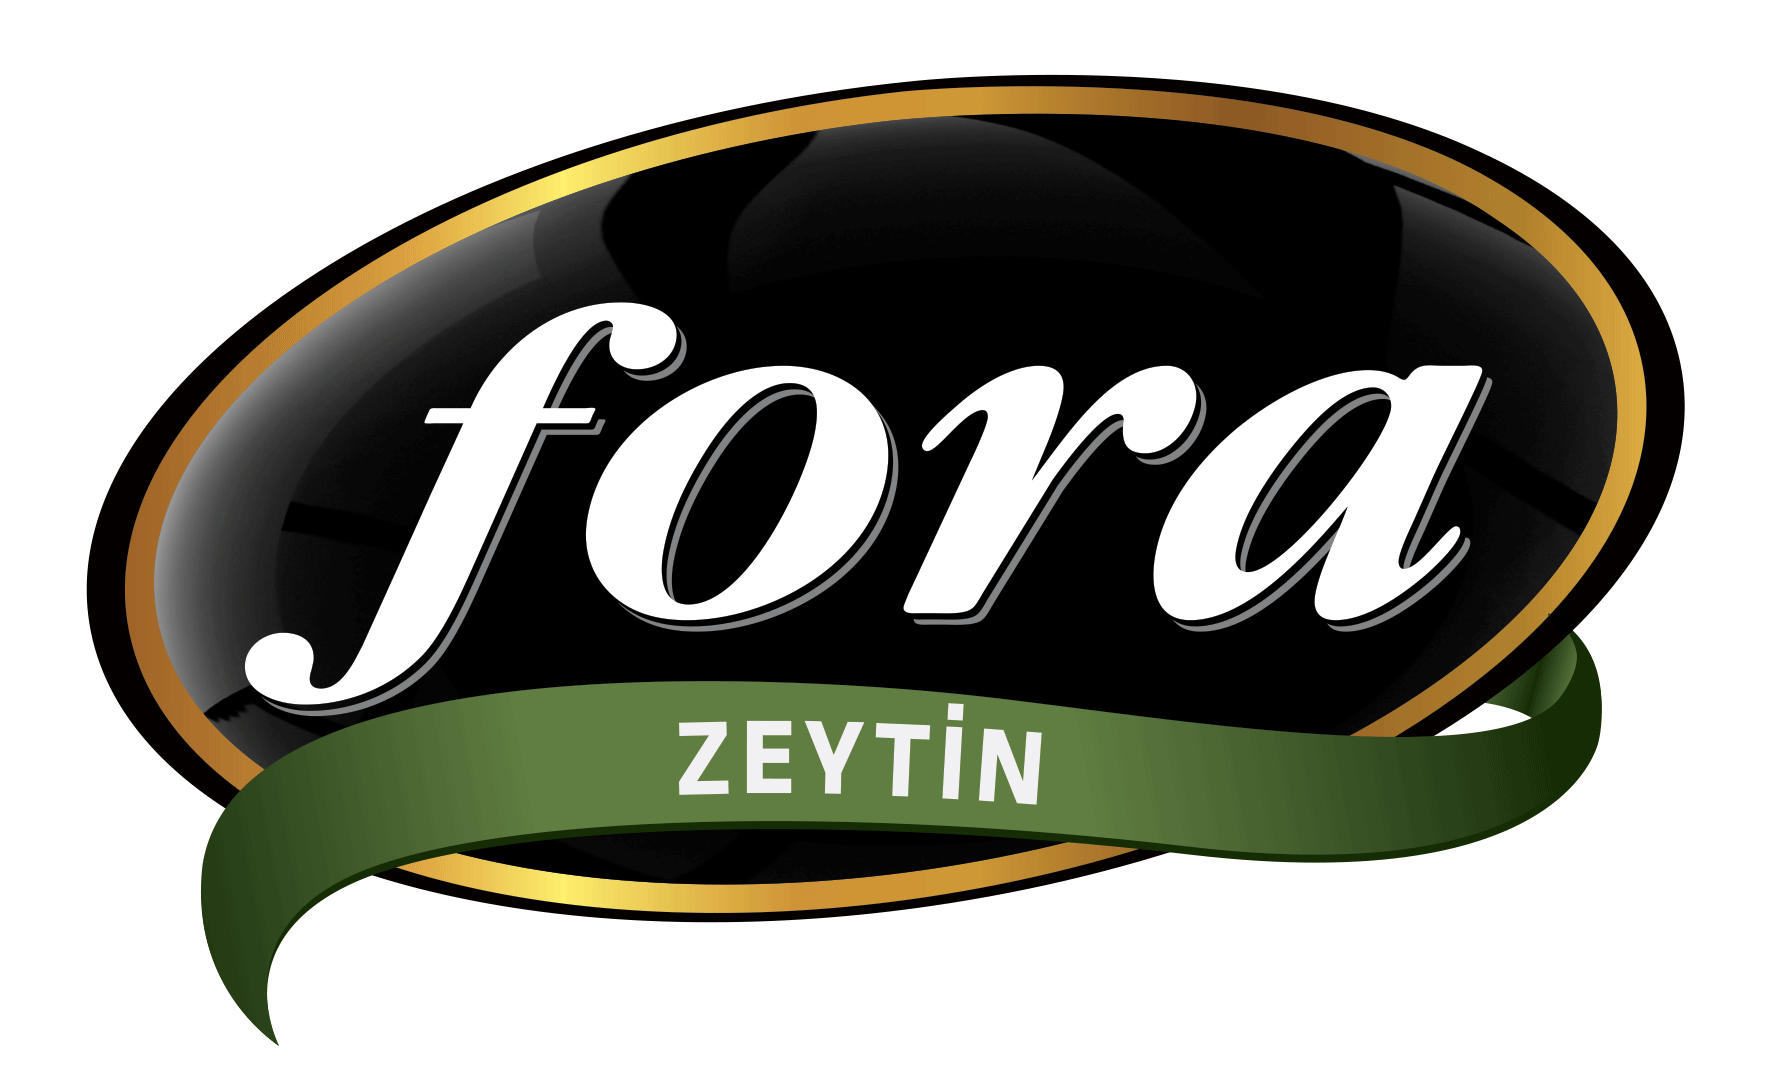 Можно fora. Fora Zeytin logo. Fora оливки. Оливка логотип. Логотип кафе оливка.